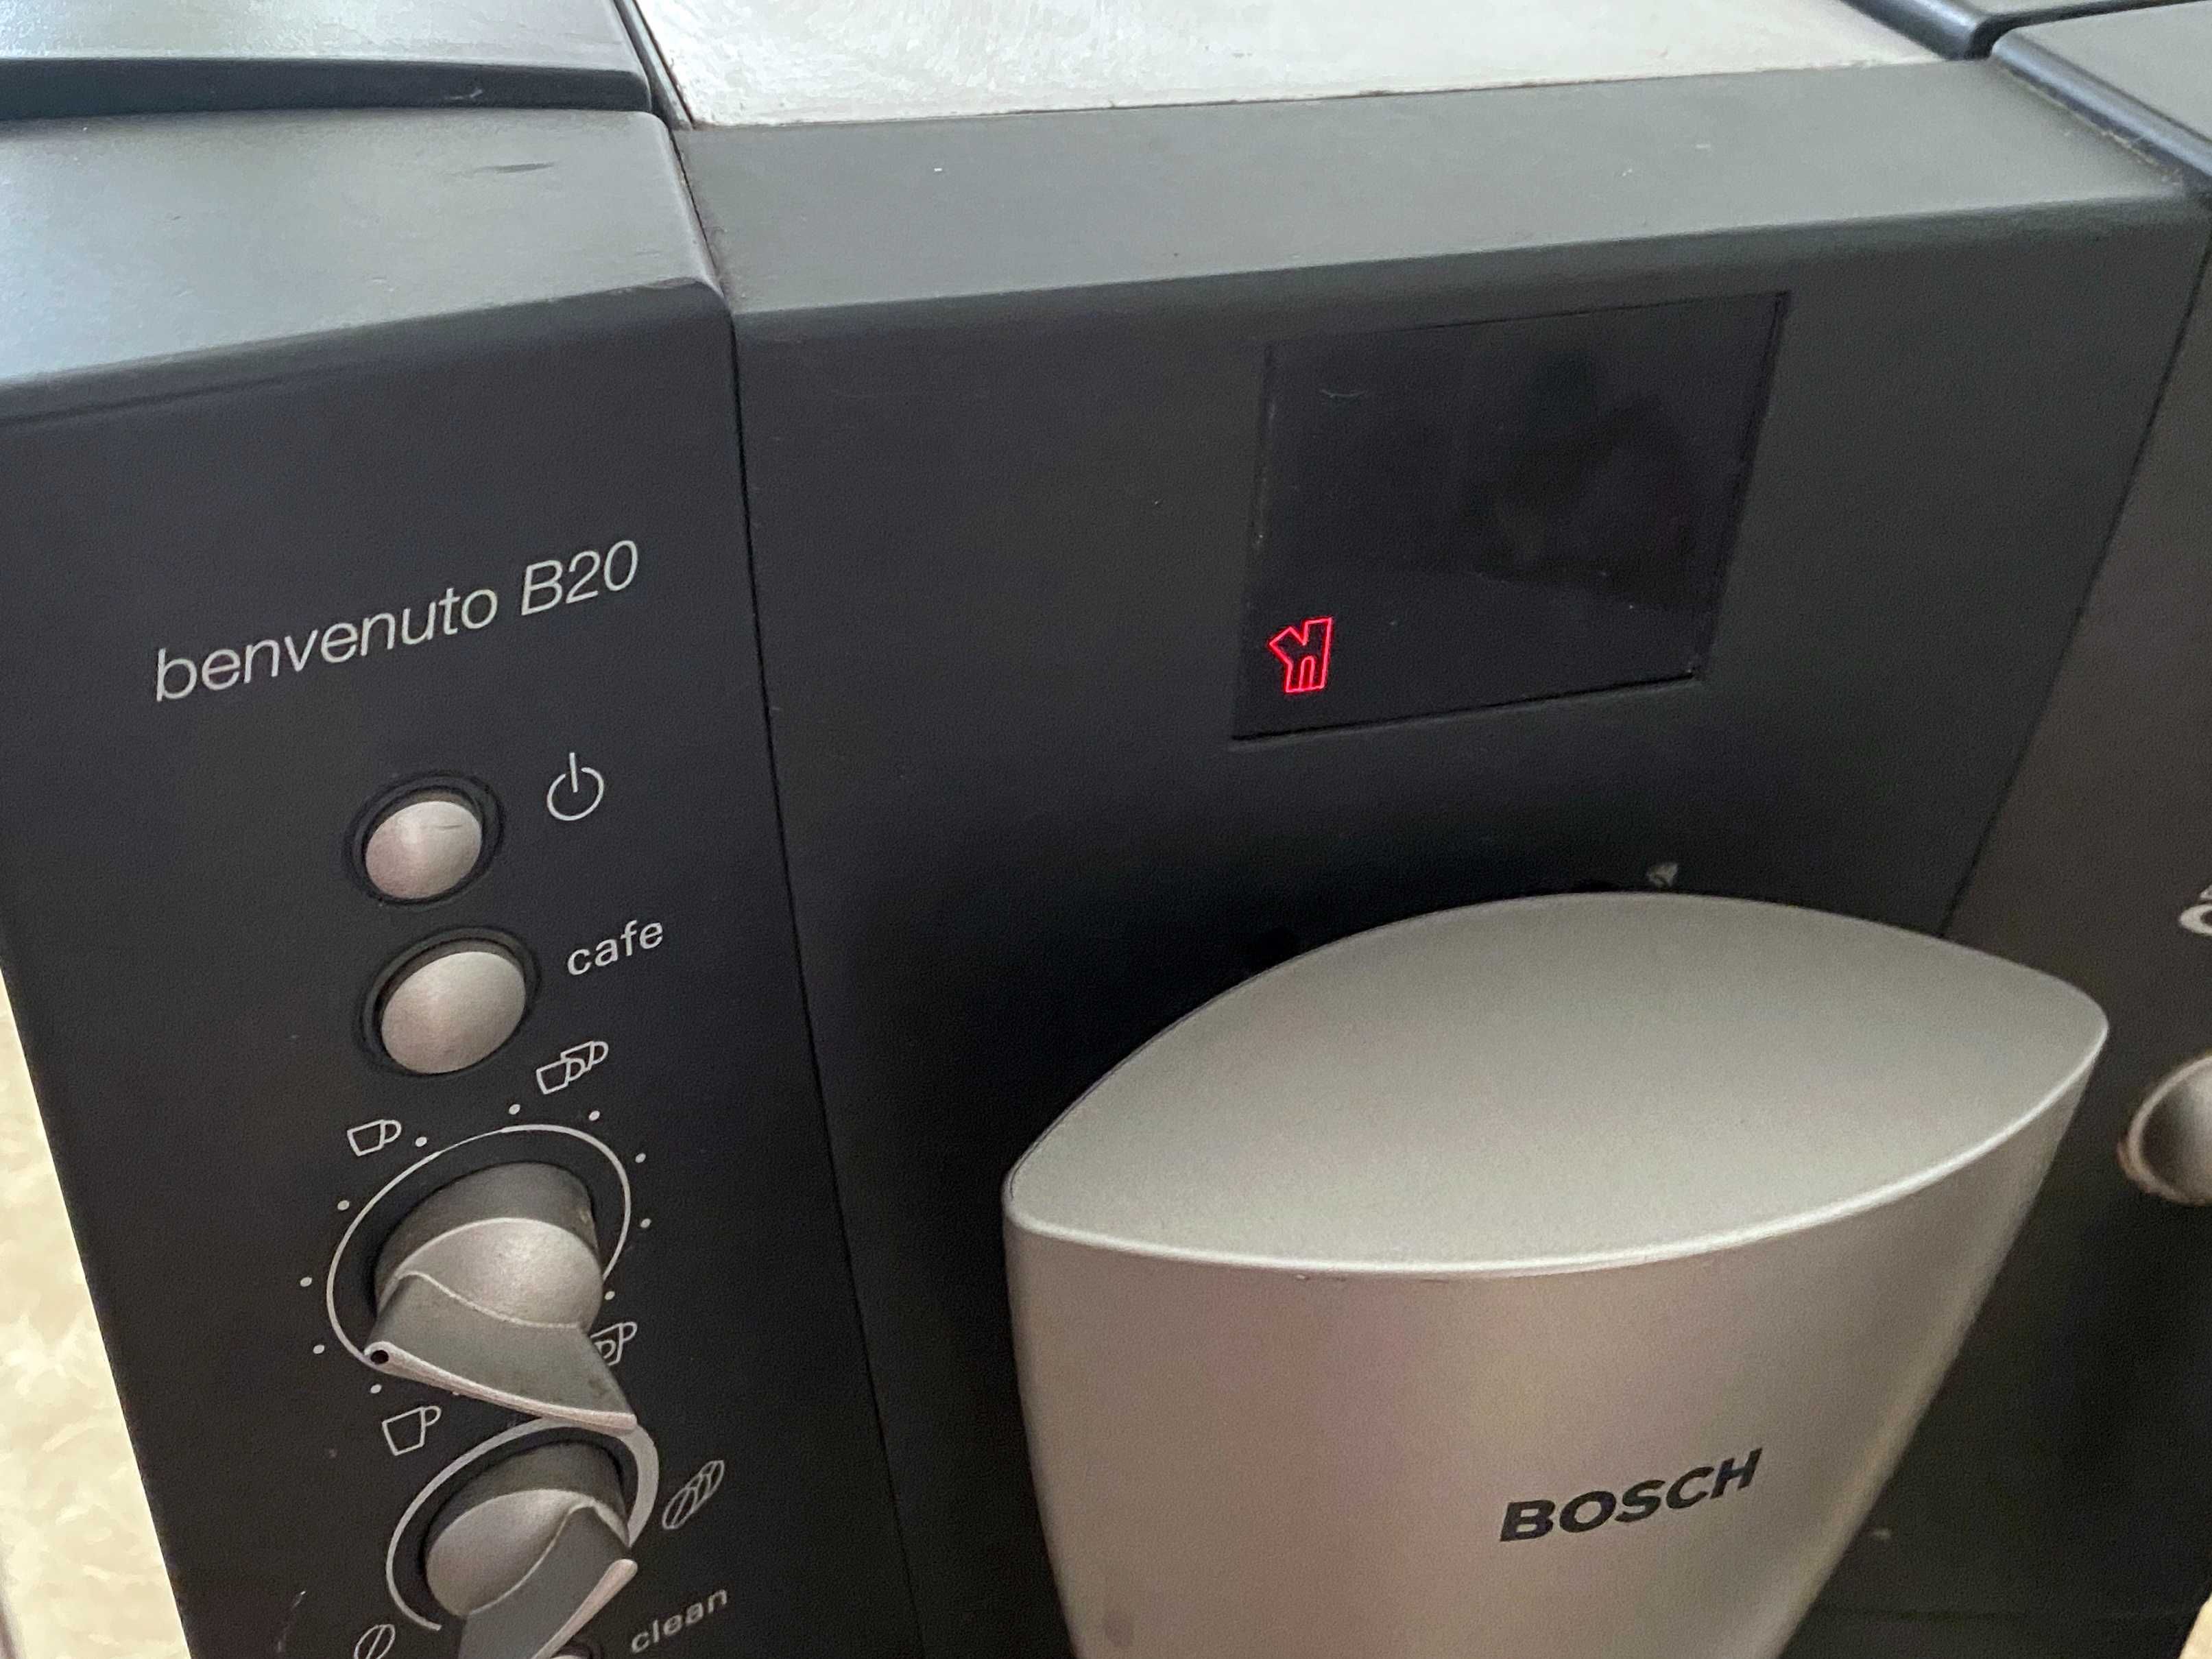 Espressor automat cu rasnita Bosch Benvenuto B20 - cu eroare